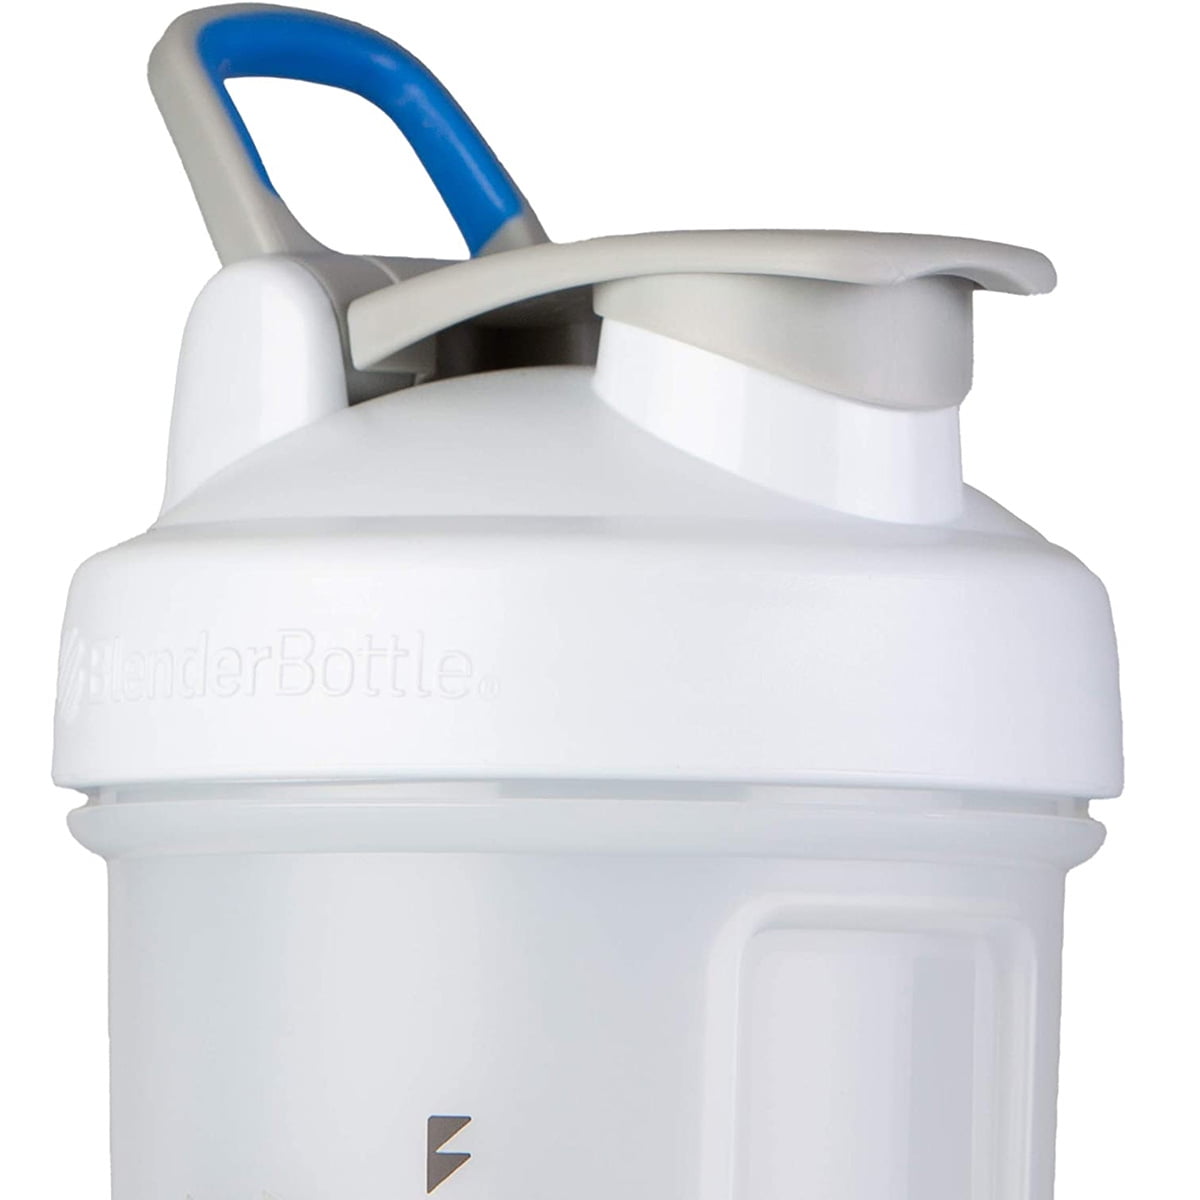 VA 28oz Shaker Bottle – Victory Apparel, Inc.